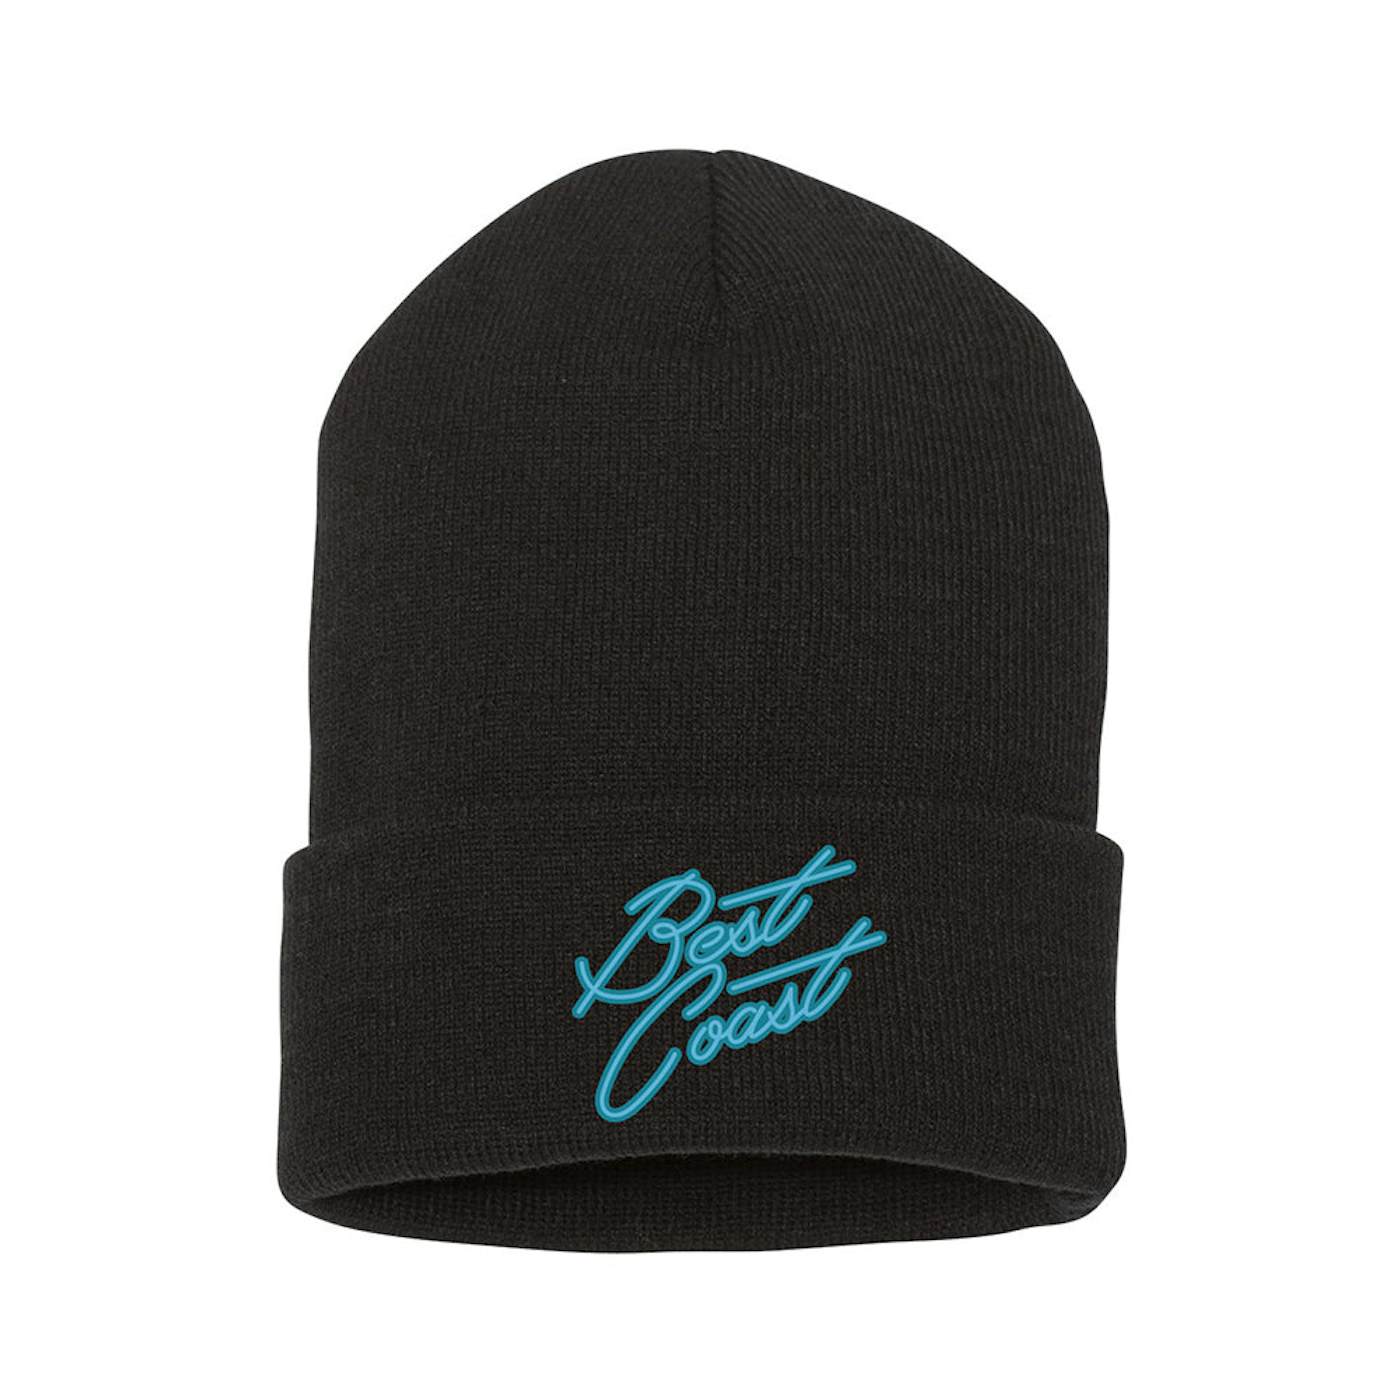 Best Coast Embroidered Logo Black Knit Cap